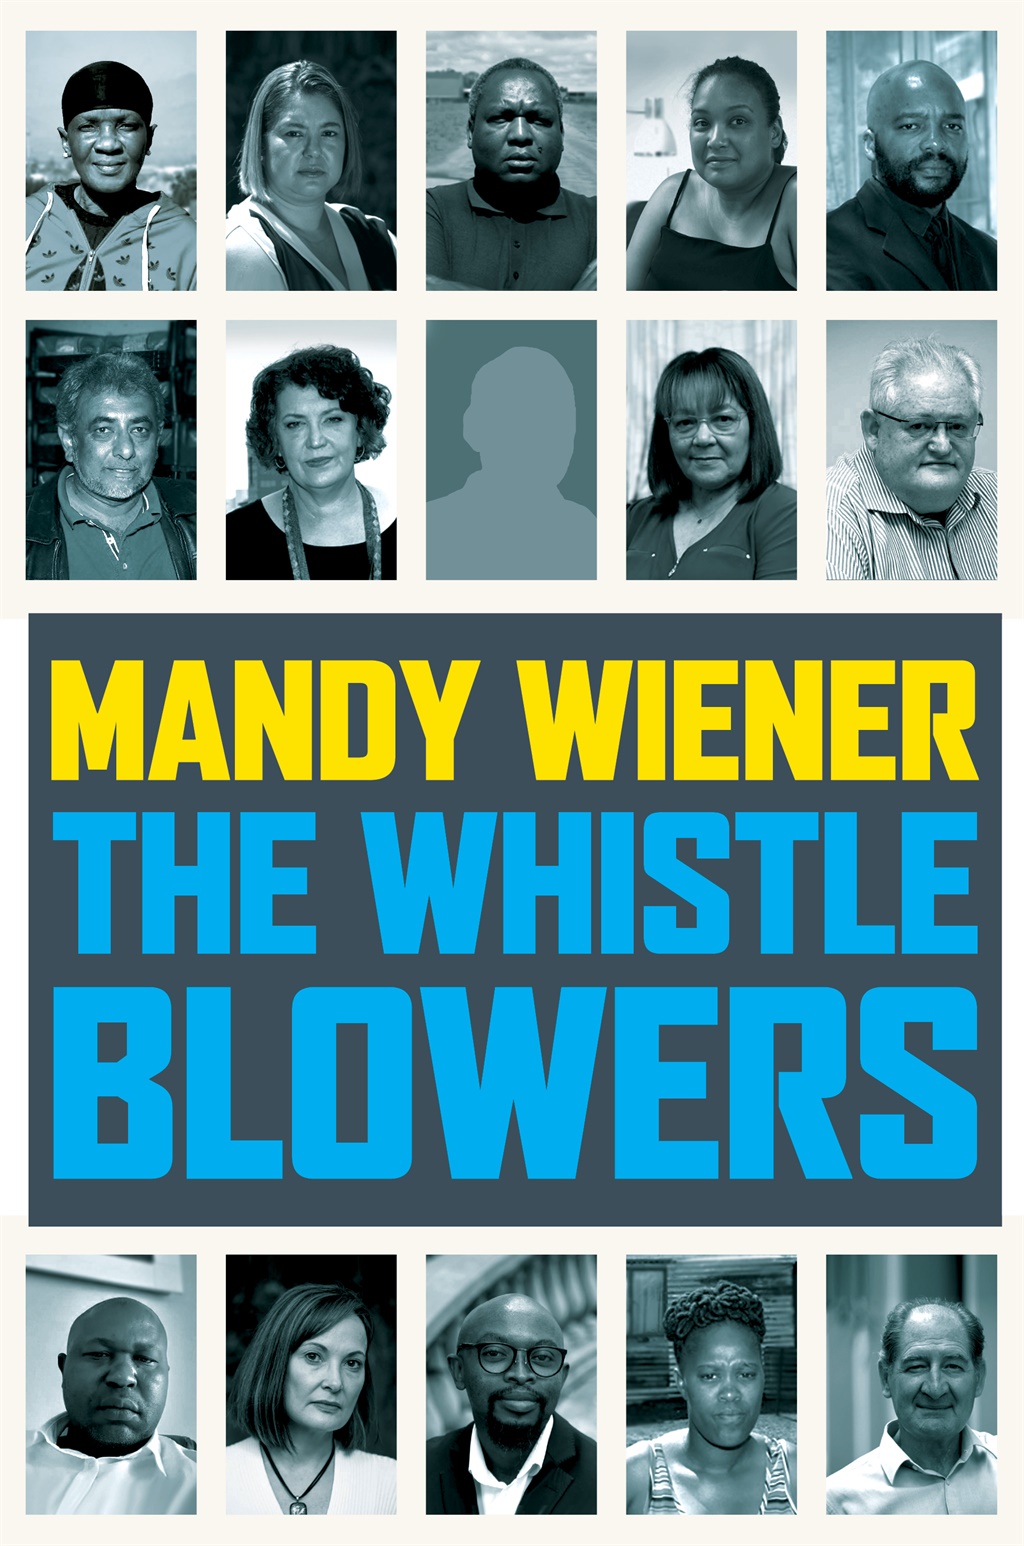 The Whistleblowers